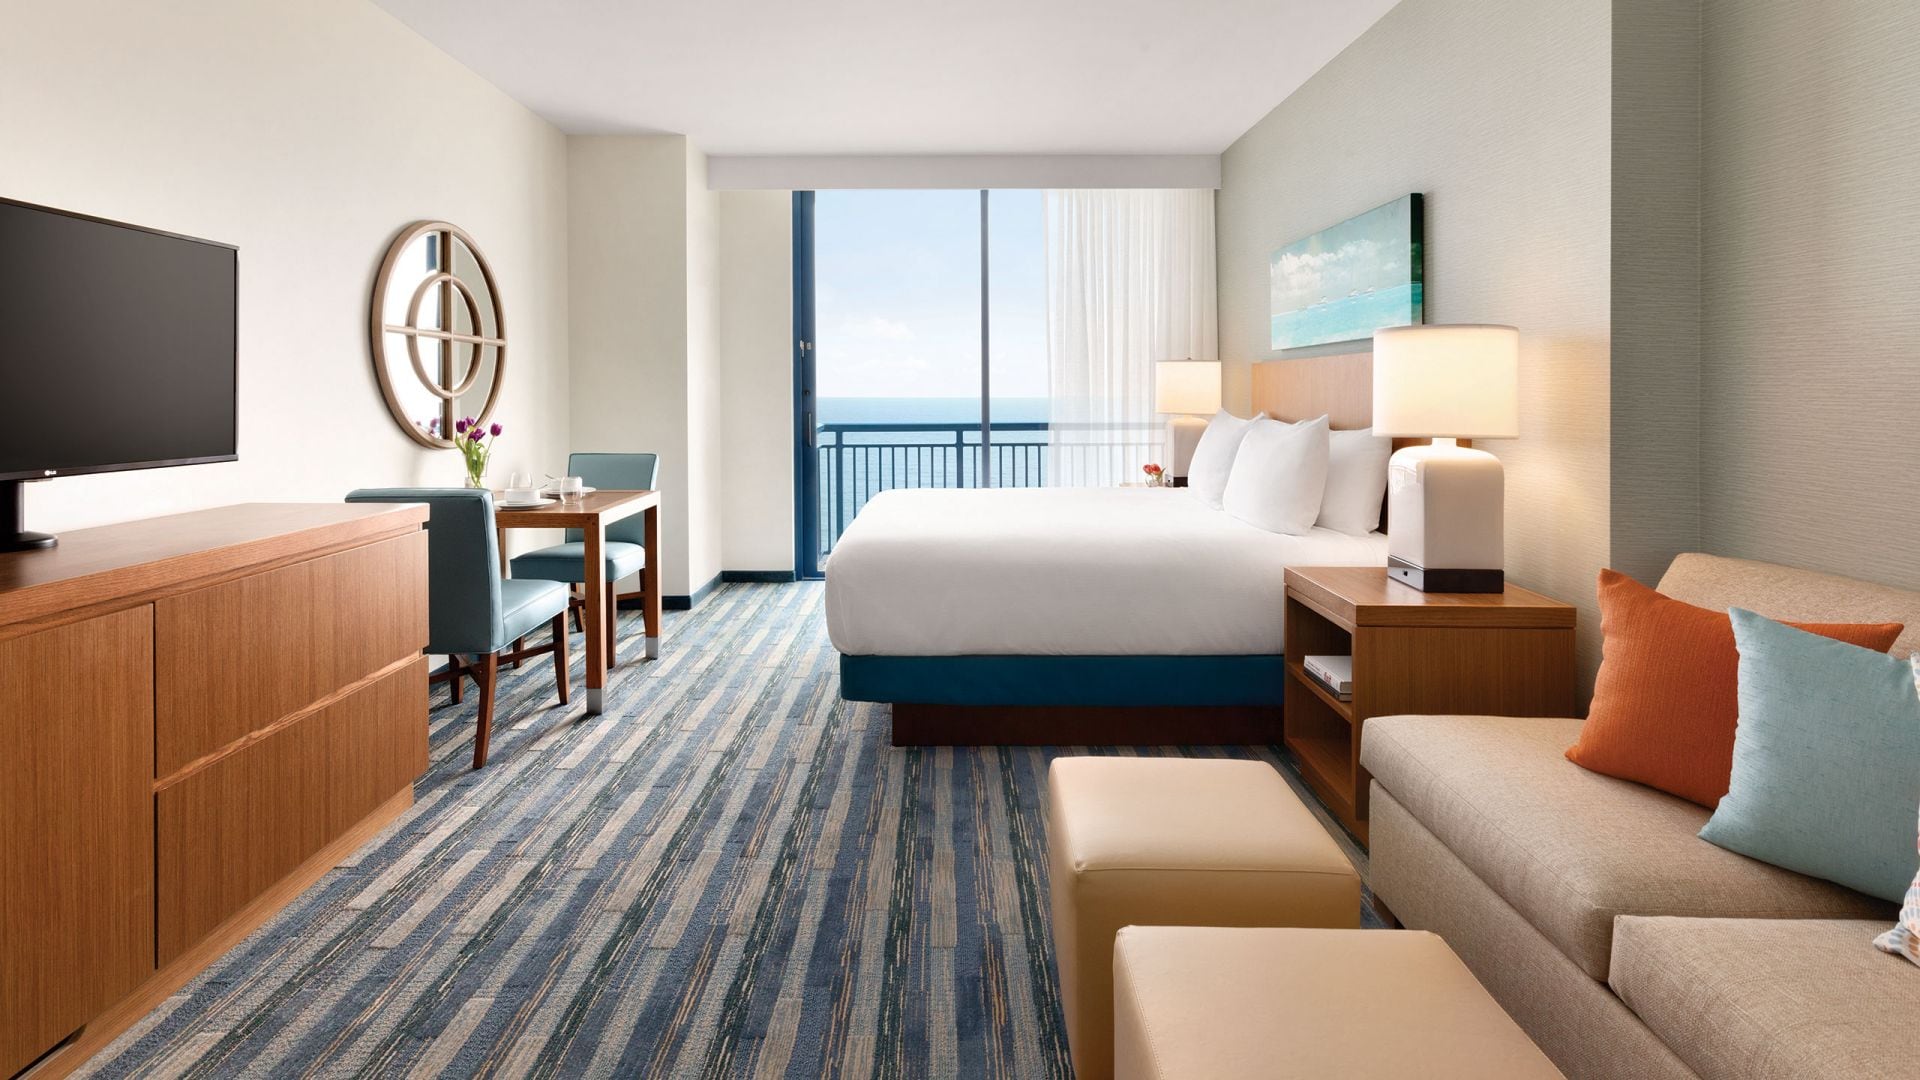 Extended Stay Hotels in Virginia Beach | Hyatt House ...